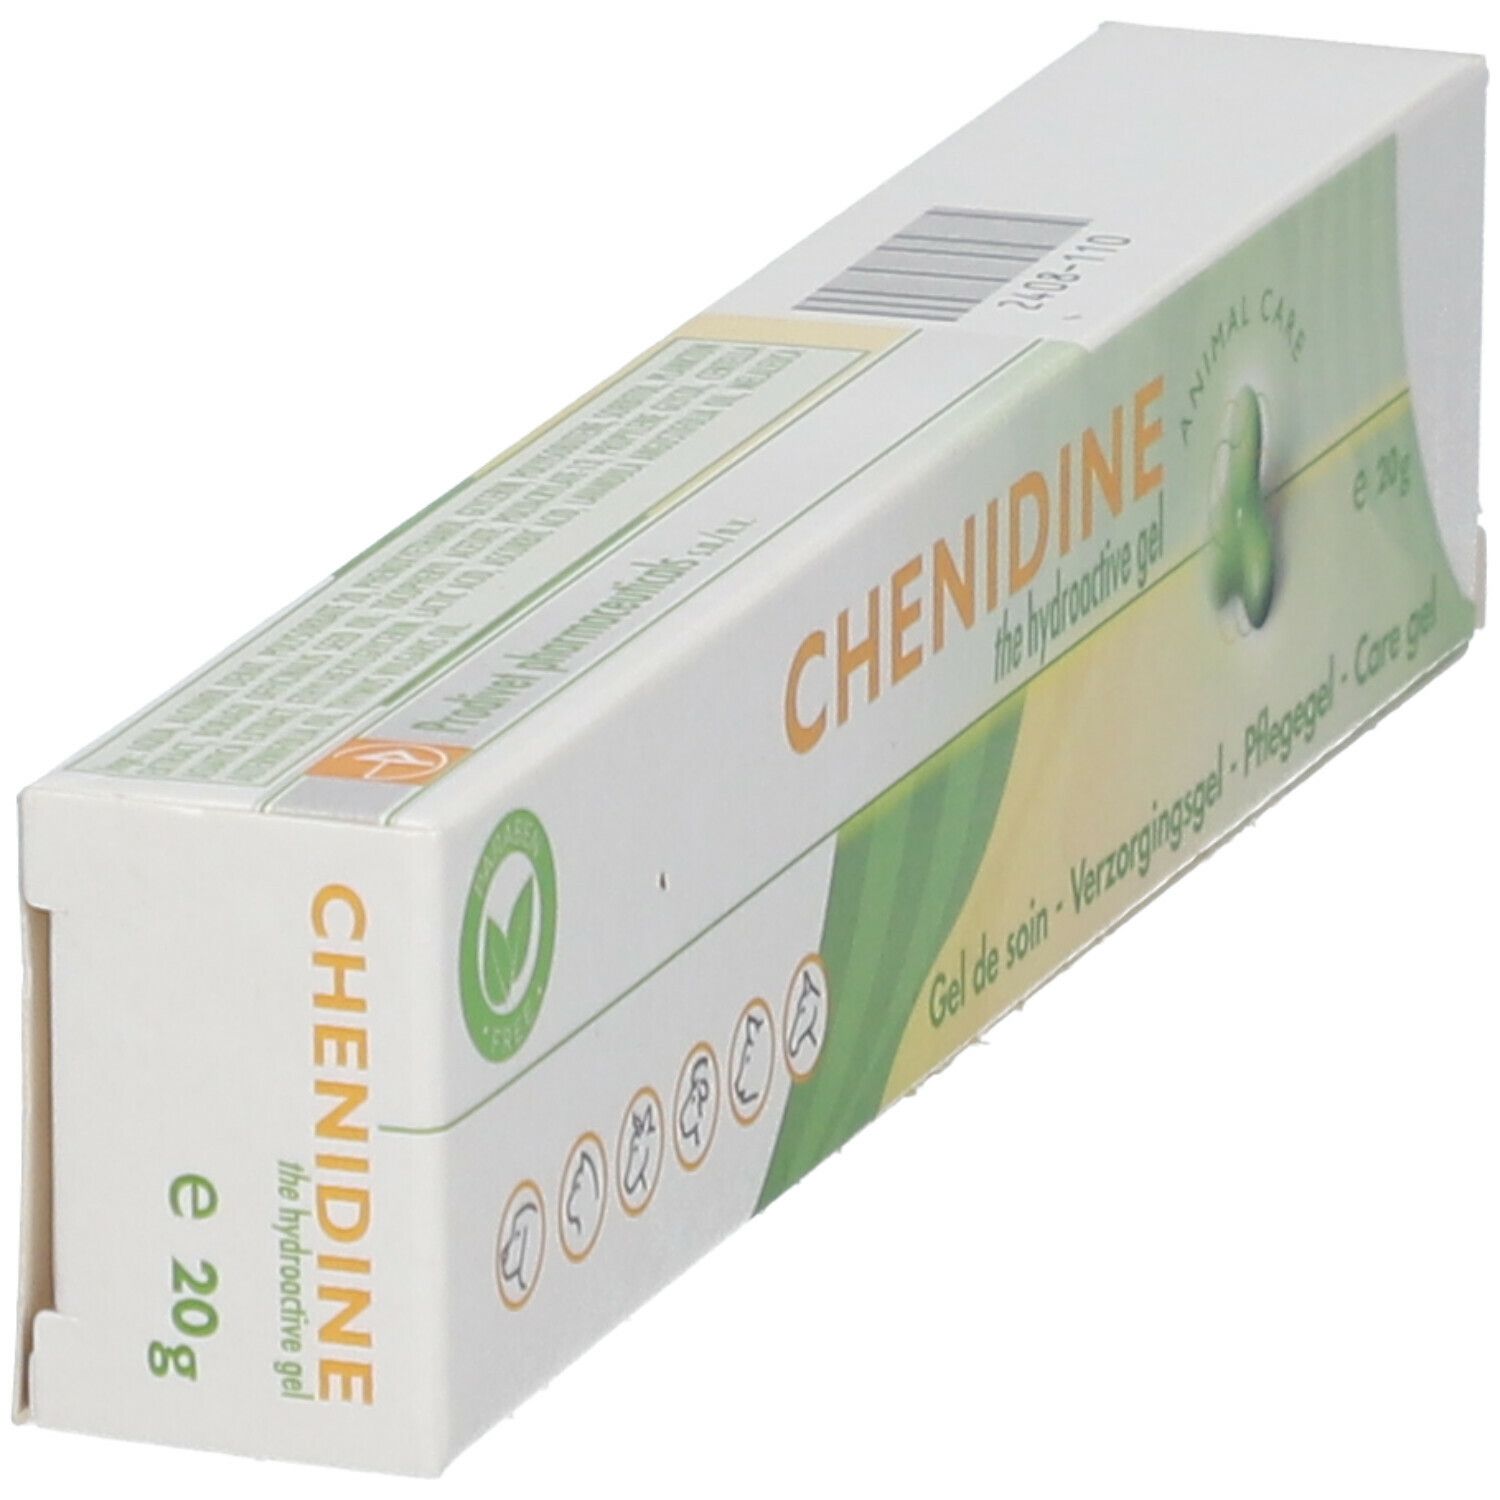 CHENIDINE® Gel de soin hydroactif